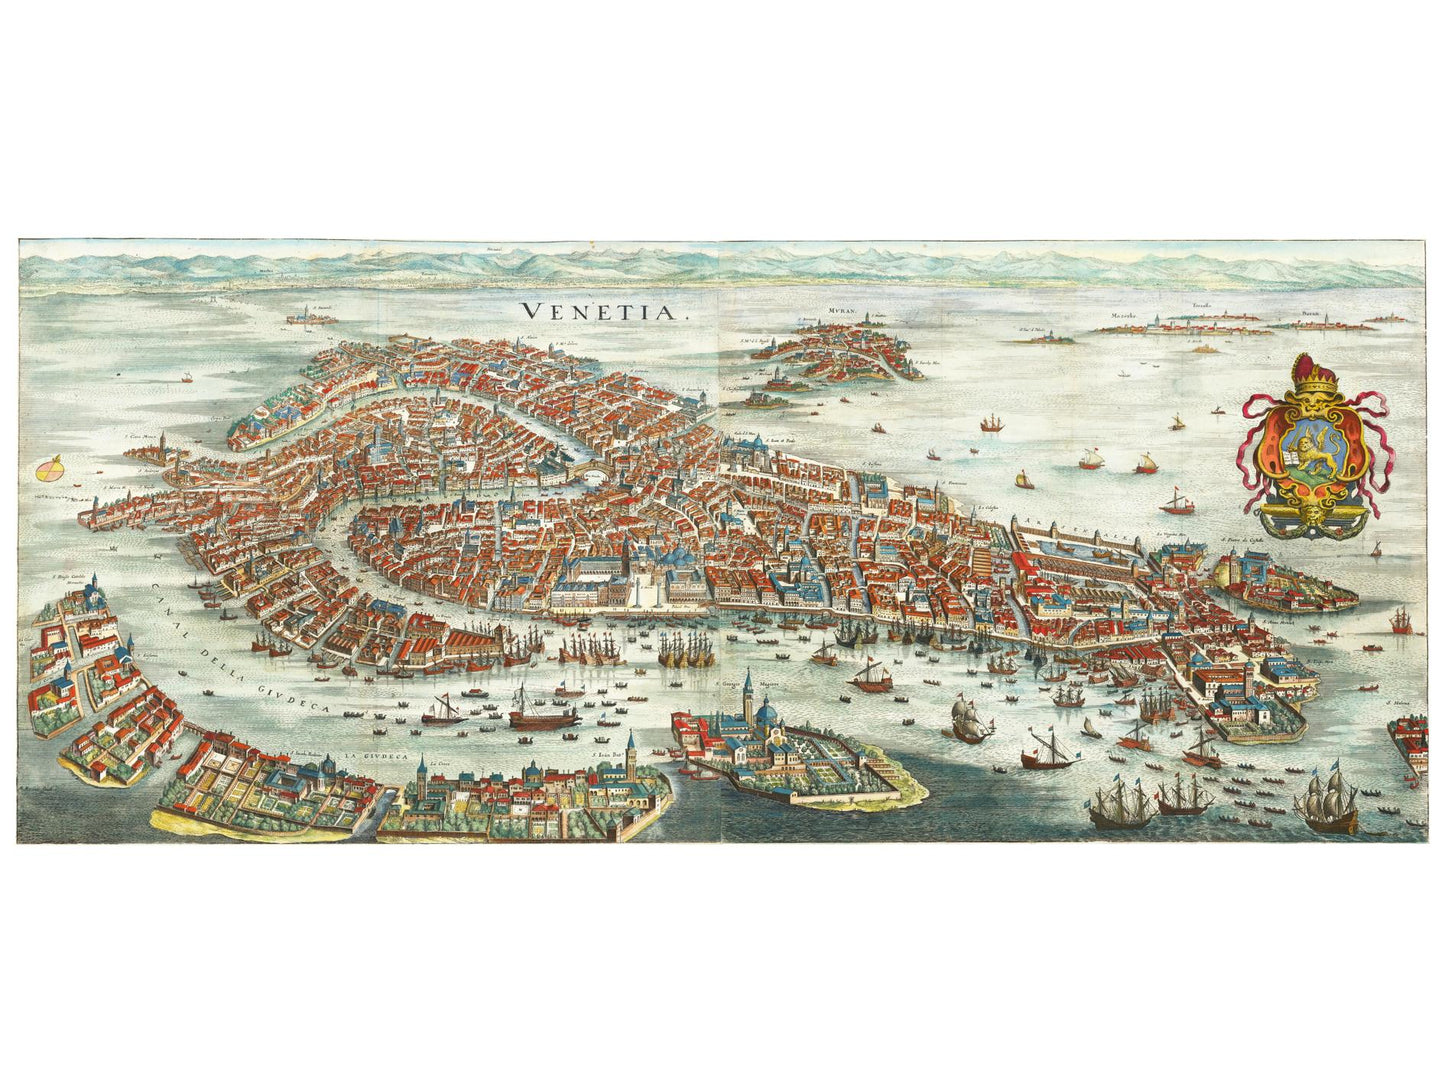 Historische Stadtansicht Venedig um 1636